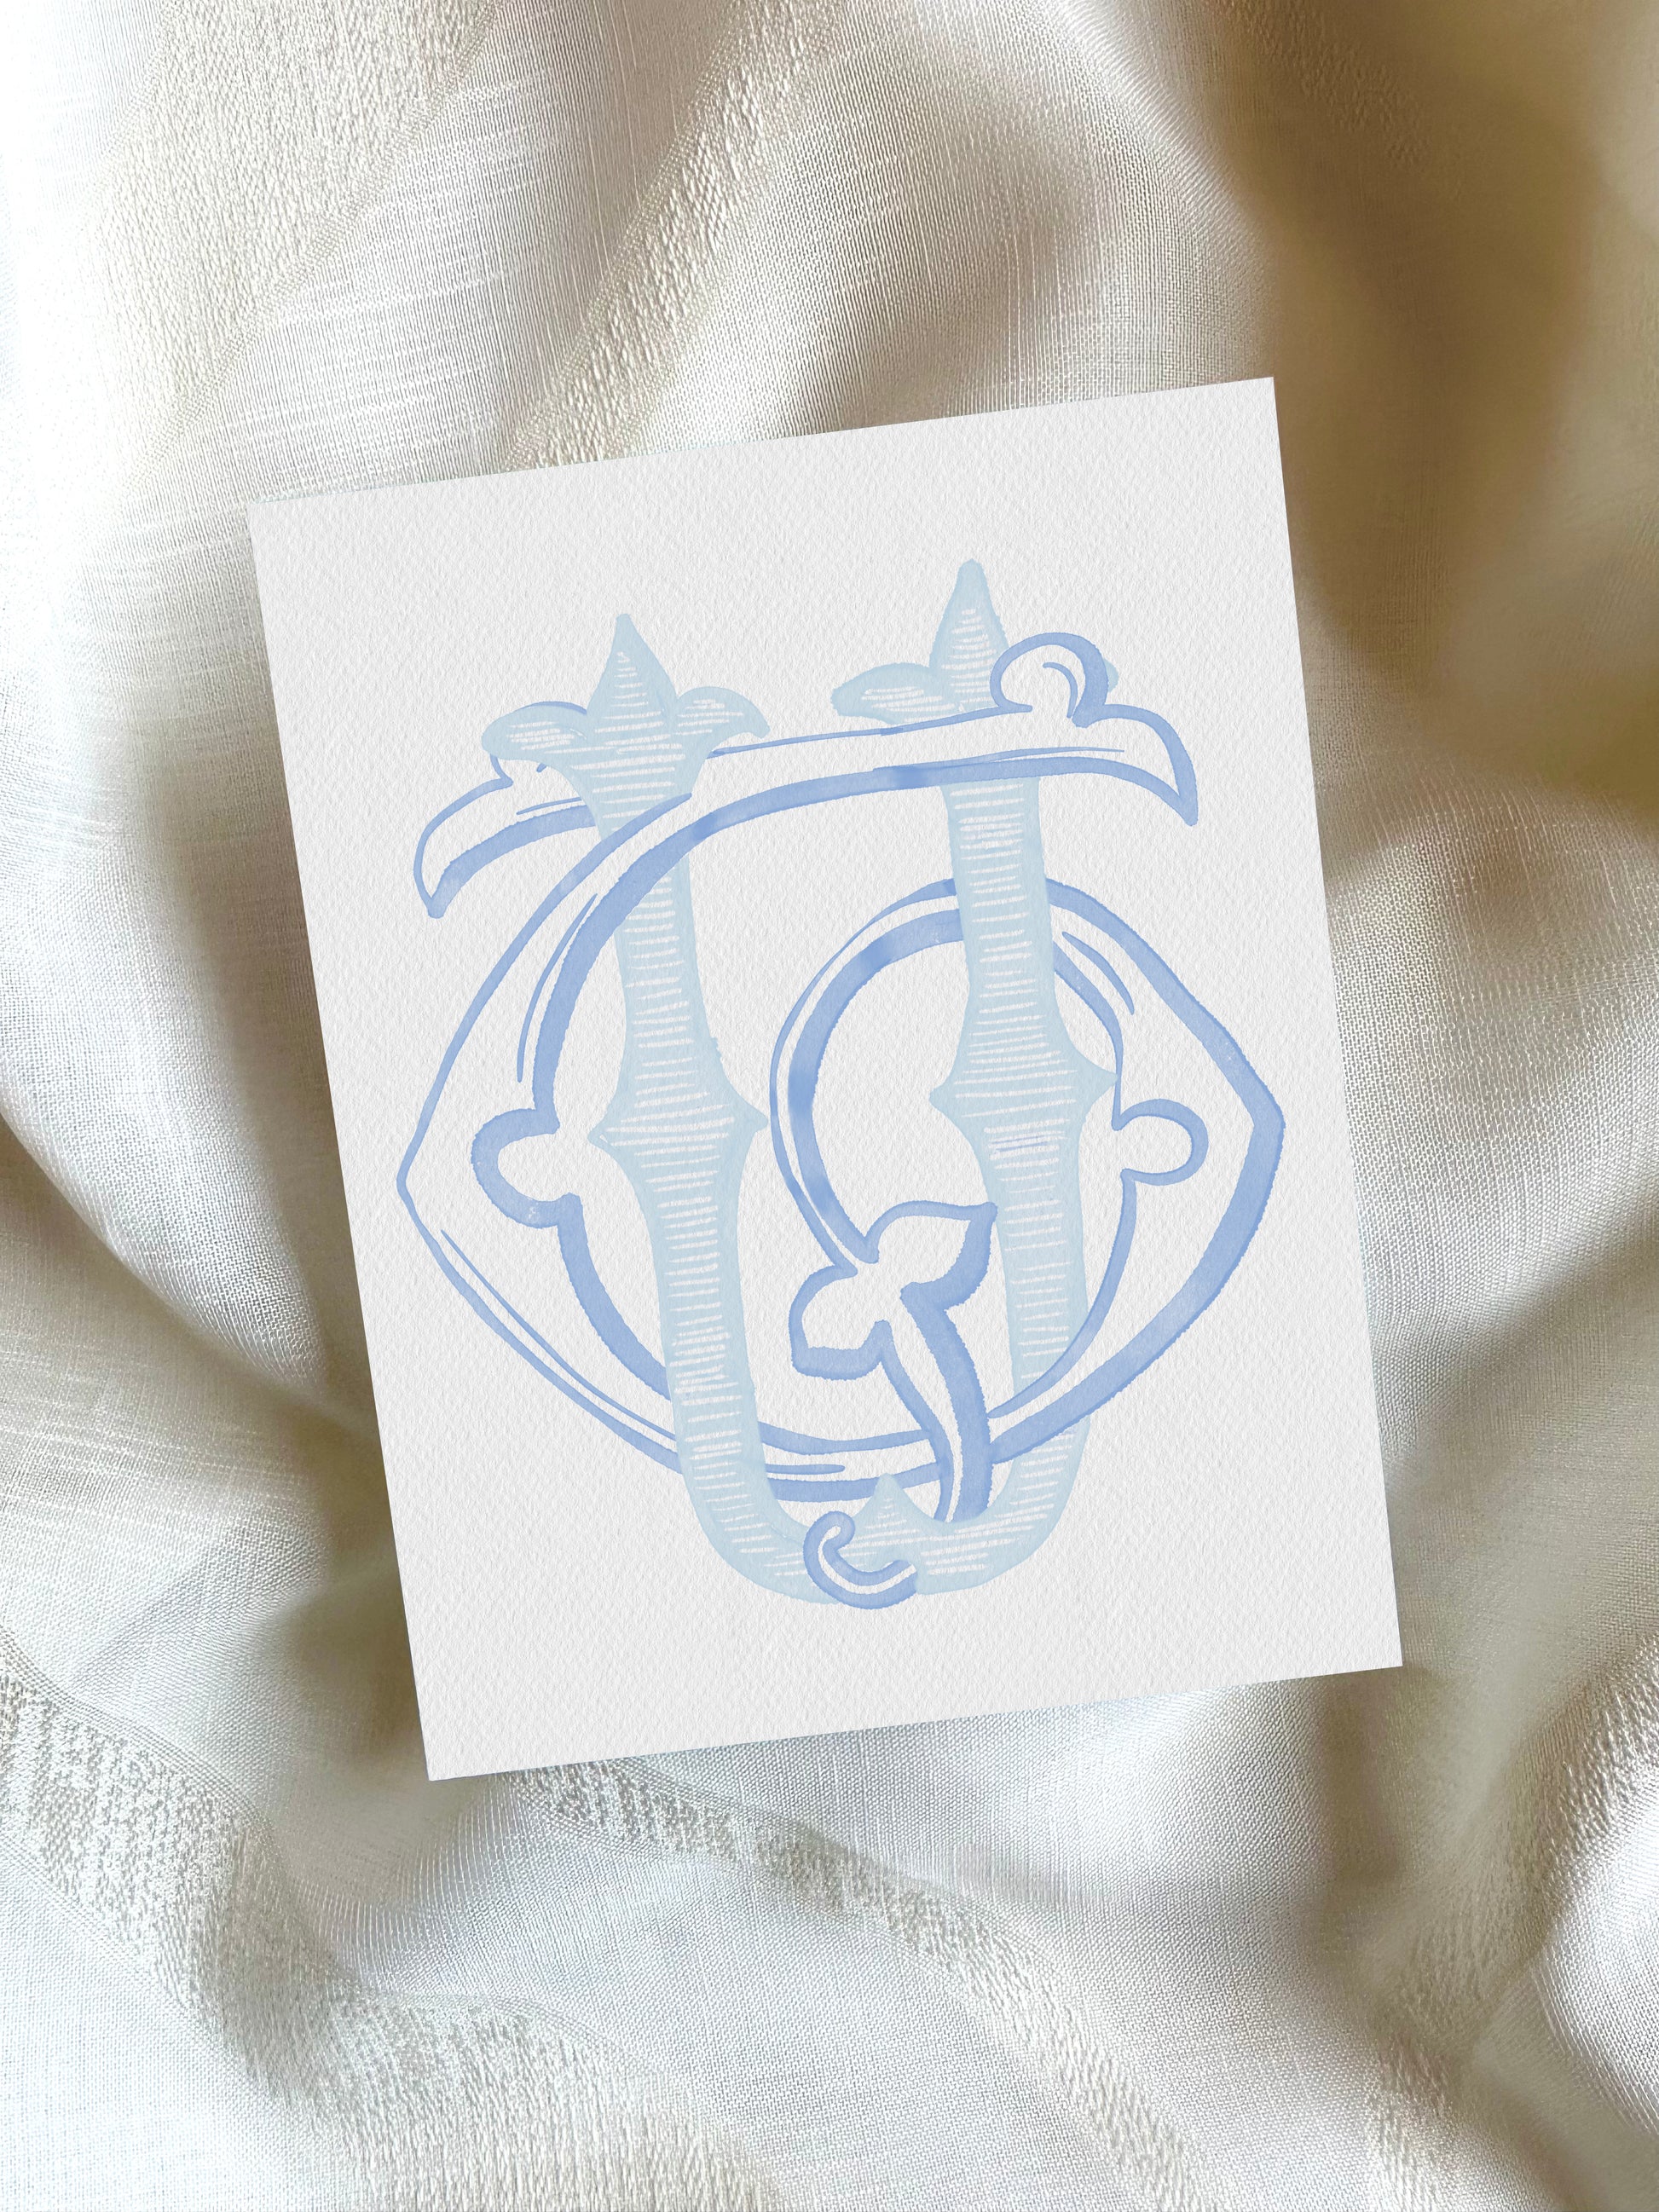 2 Letter Monogram with Letters TU UT | Digital Download - Wedding Monogram SVG, Personal Logo, Wedding Logo for Wedding Invitations The Wedding Crest Lab